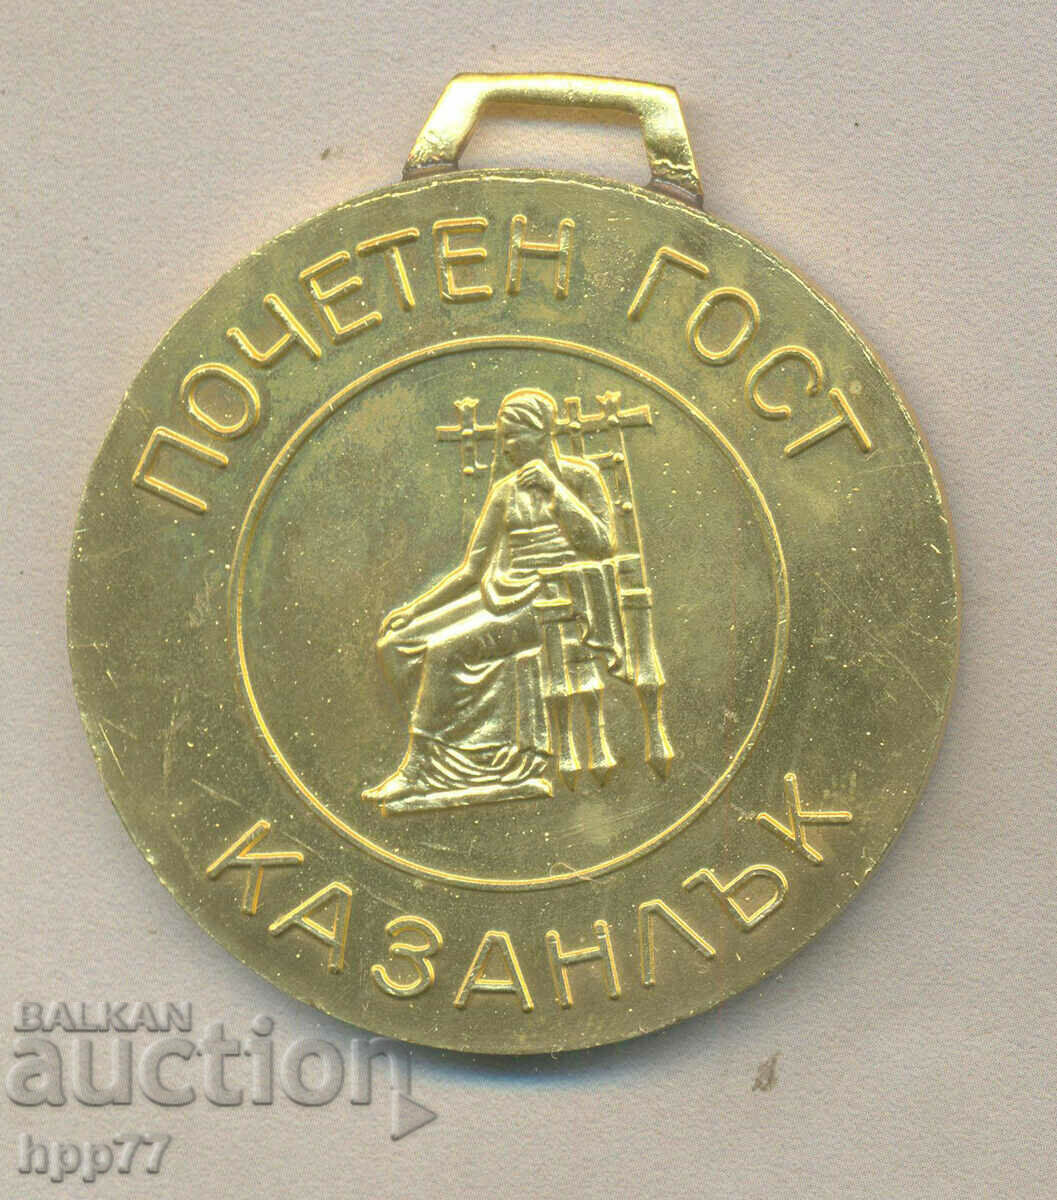 Rare award plaque medal Honored Guest Kazanlak